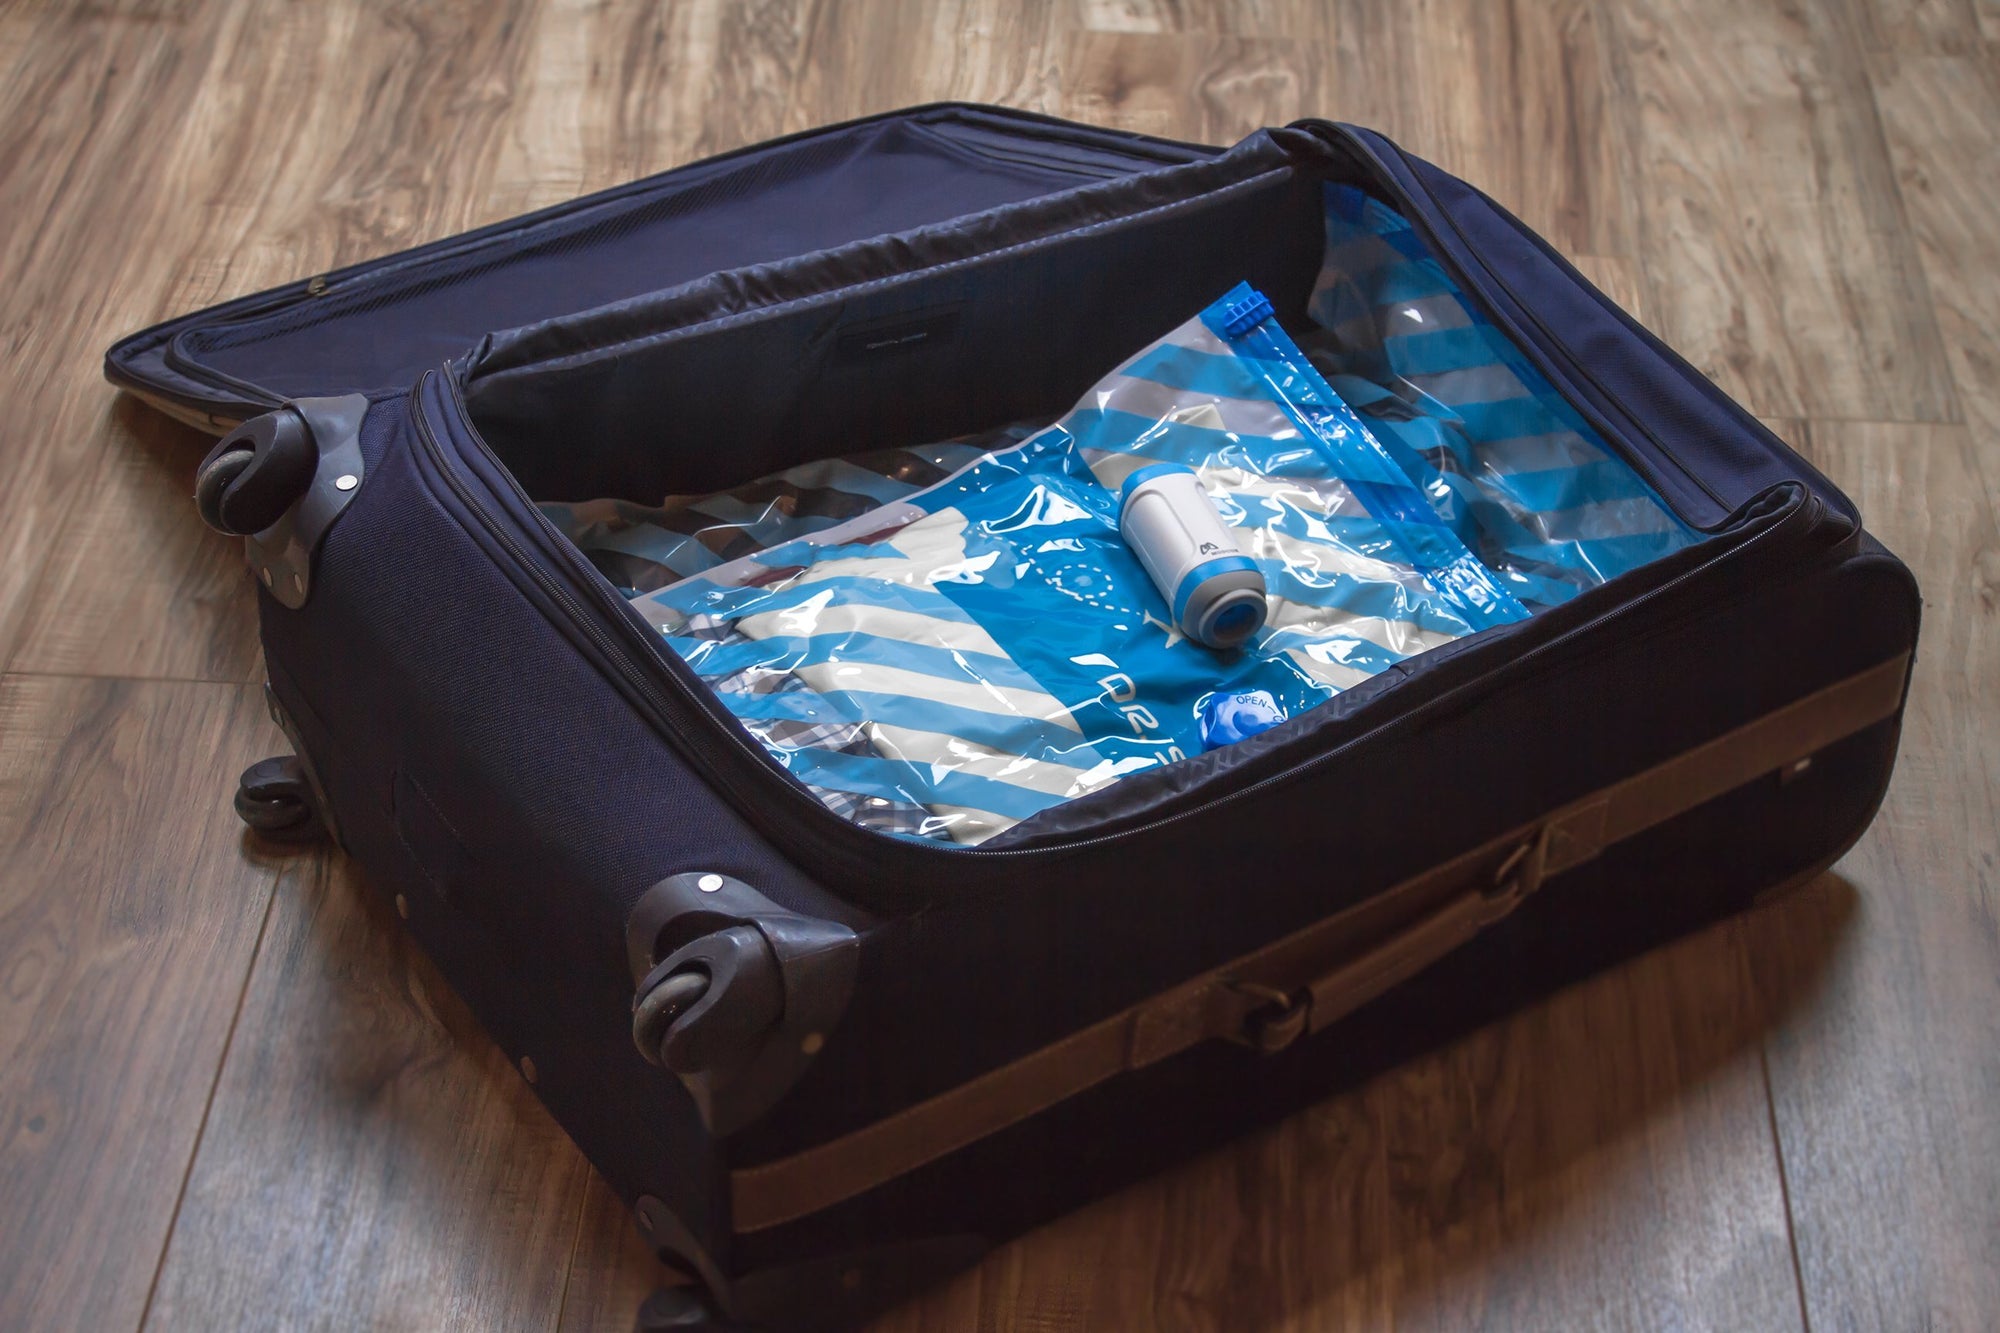 4 Pack Clothes Storage Vacumm Bags Travel Set – DR. SAVE